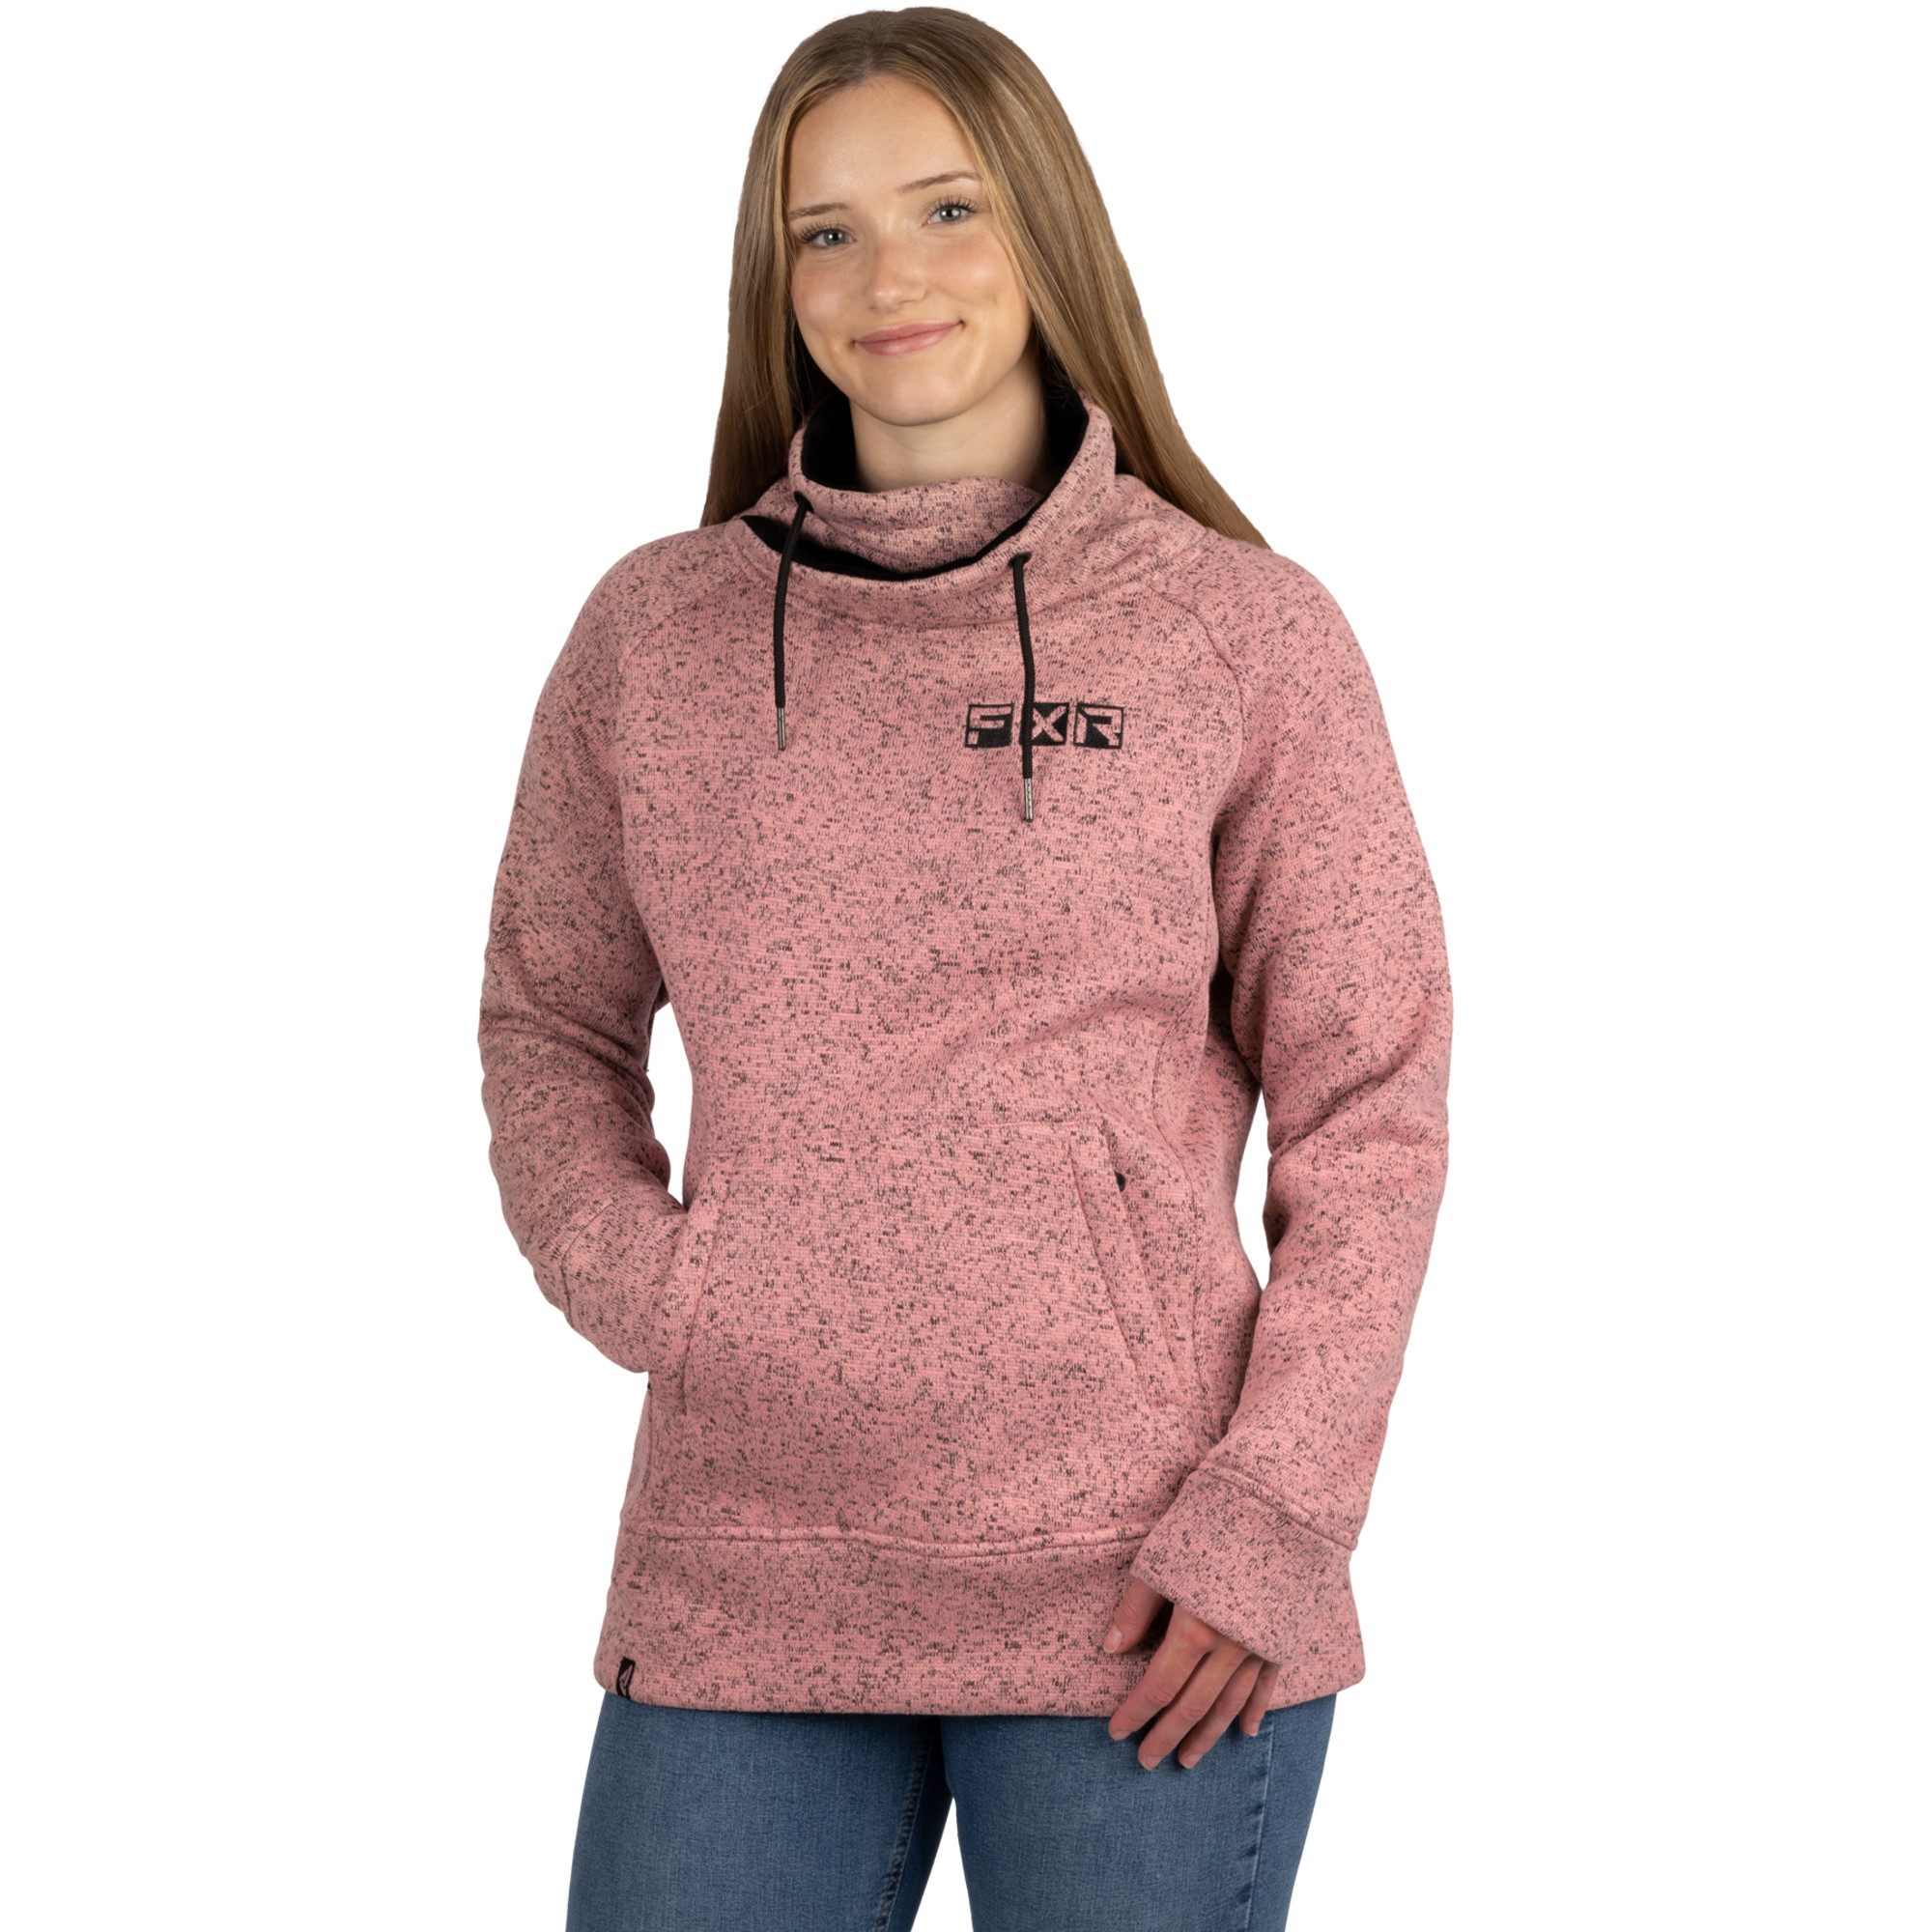 mode femmes kangourous par fxr racing pour ember sweater pullover